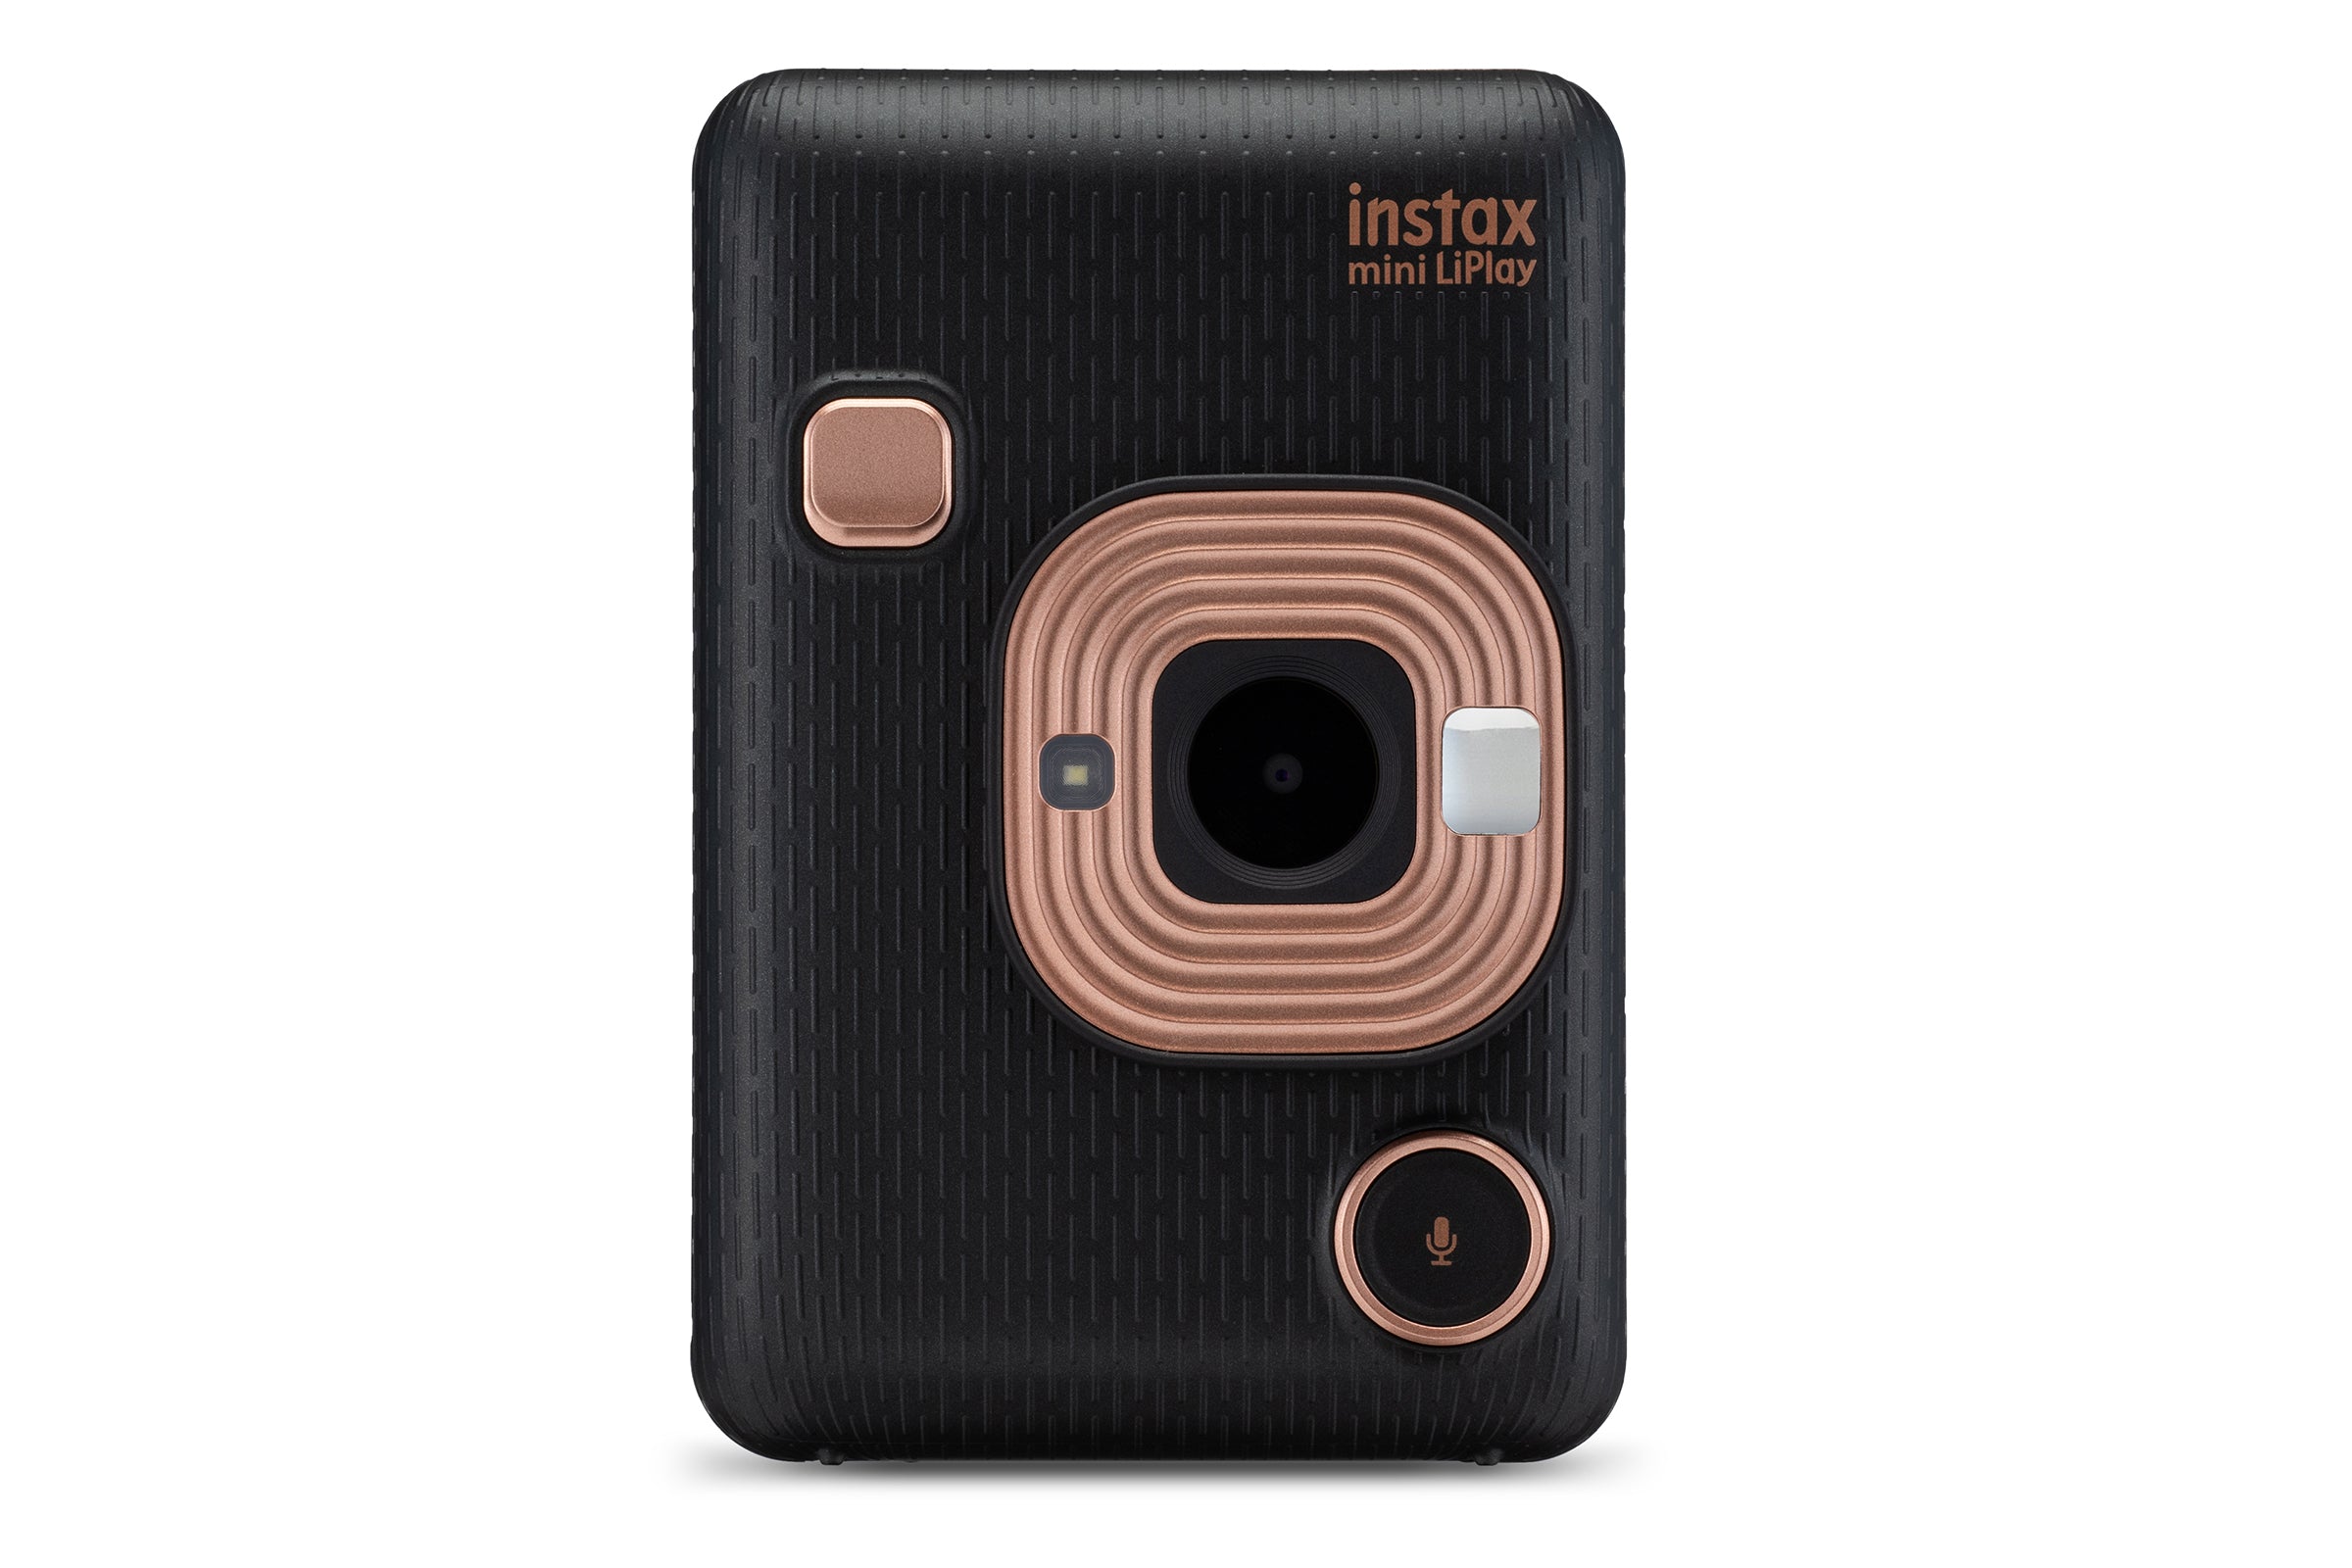 Fujifilm Instax Mini LiPlay Hybrid Instant Camera - Elegant Black